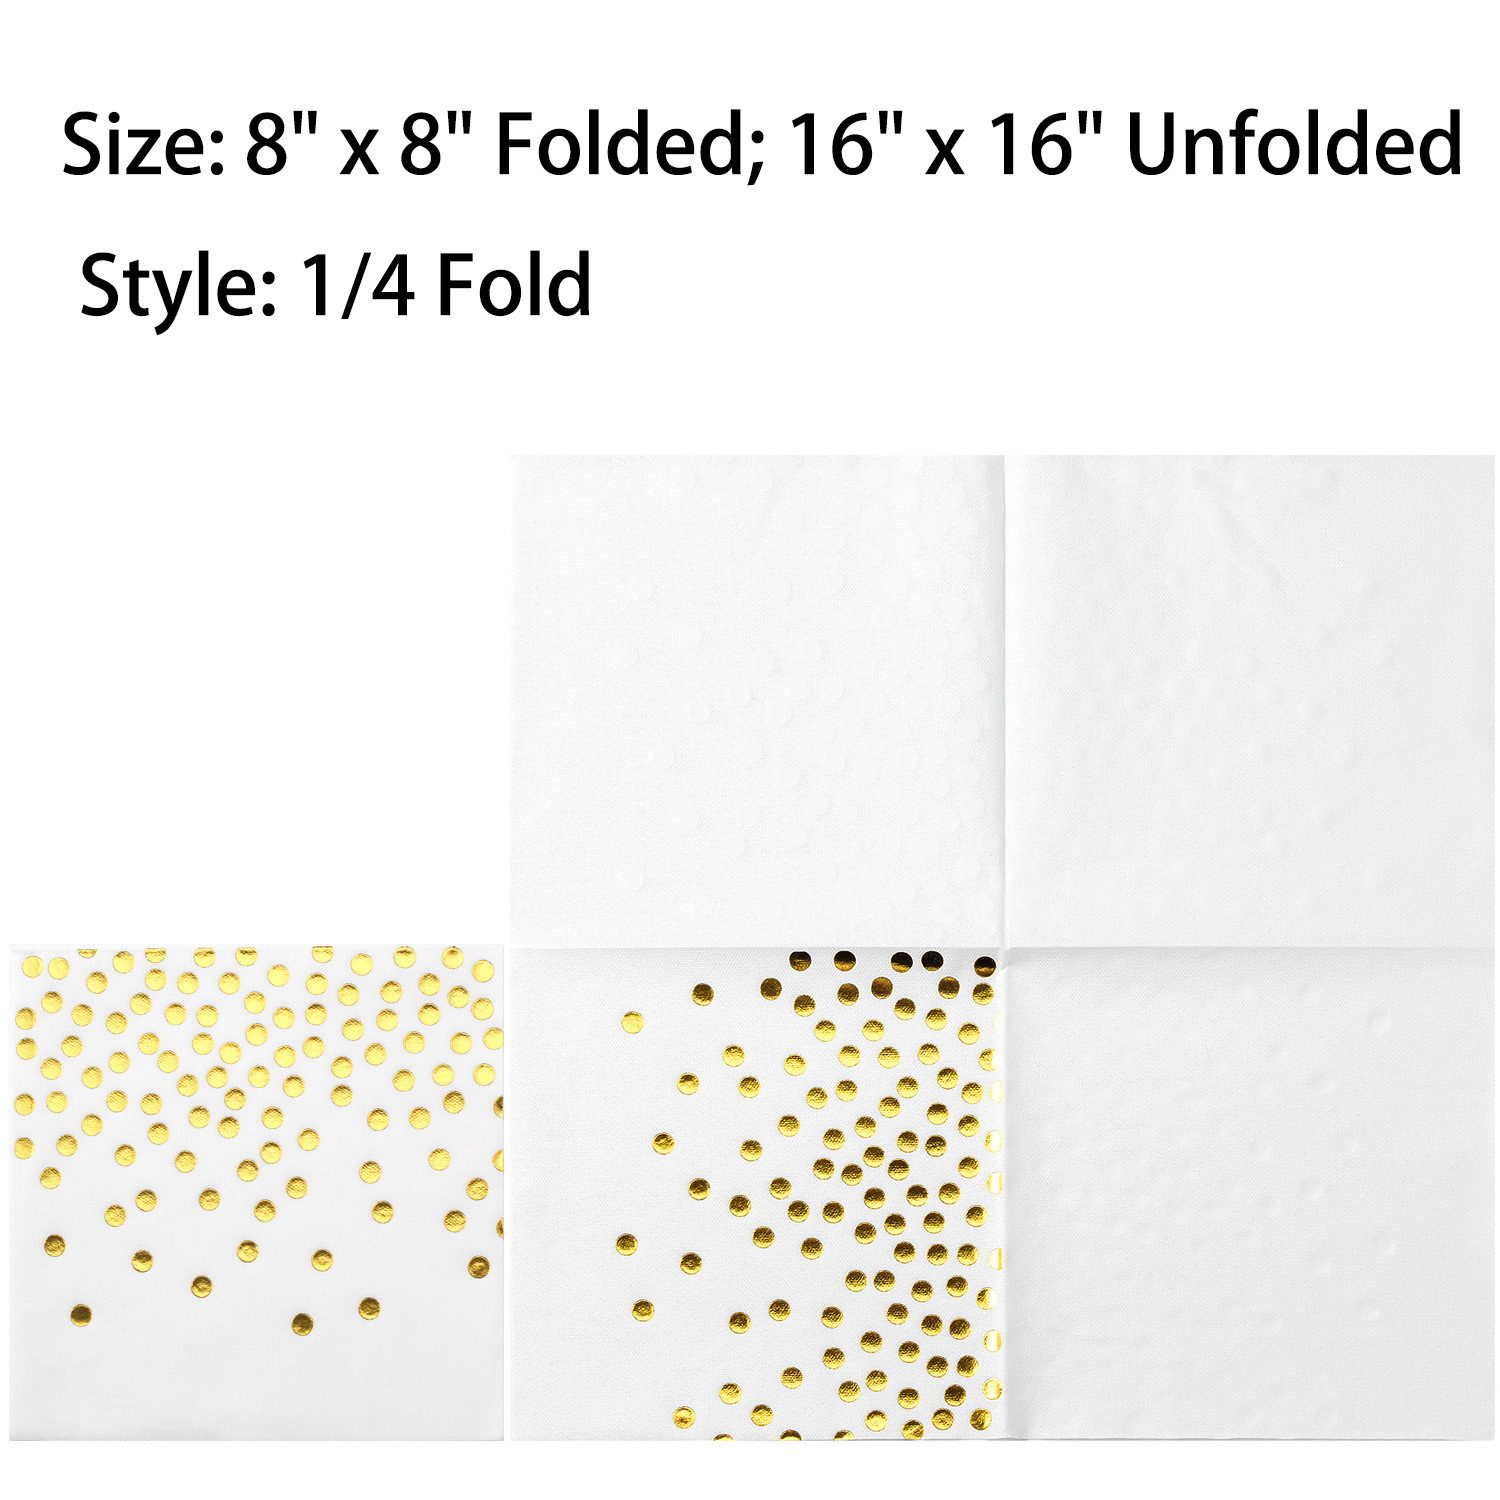 Lekoch Air-laid Disposables Paper White with Gold Dots Napkins 50PCS